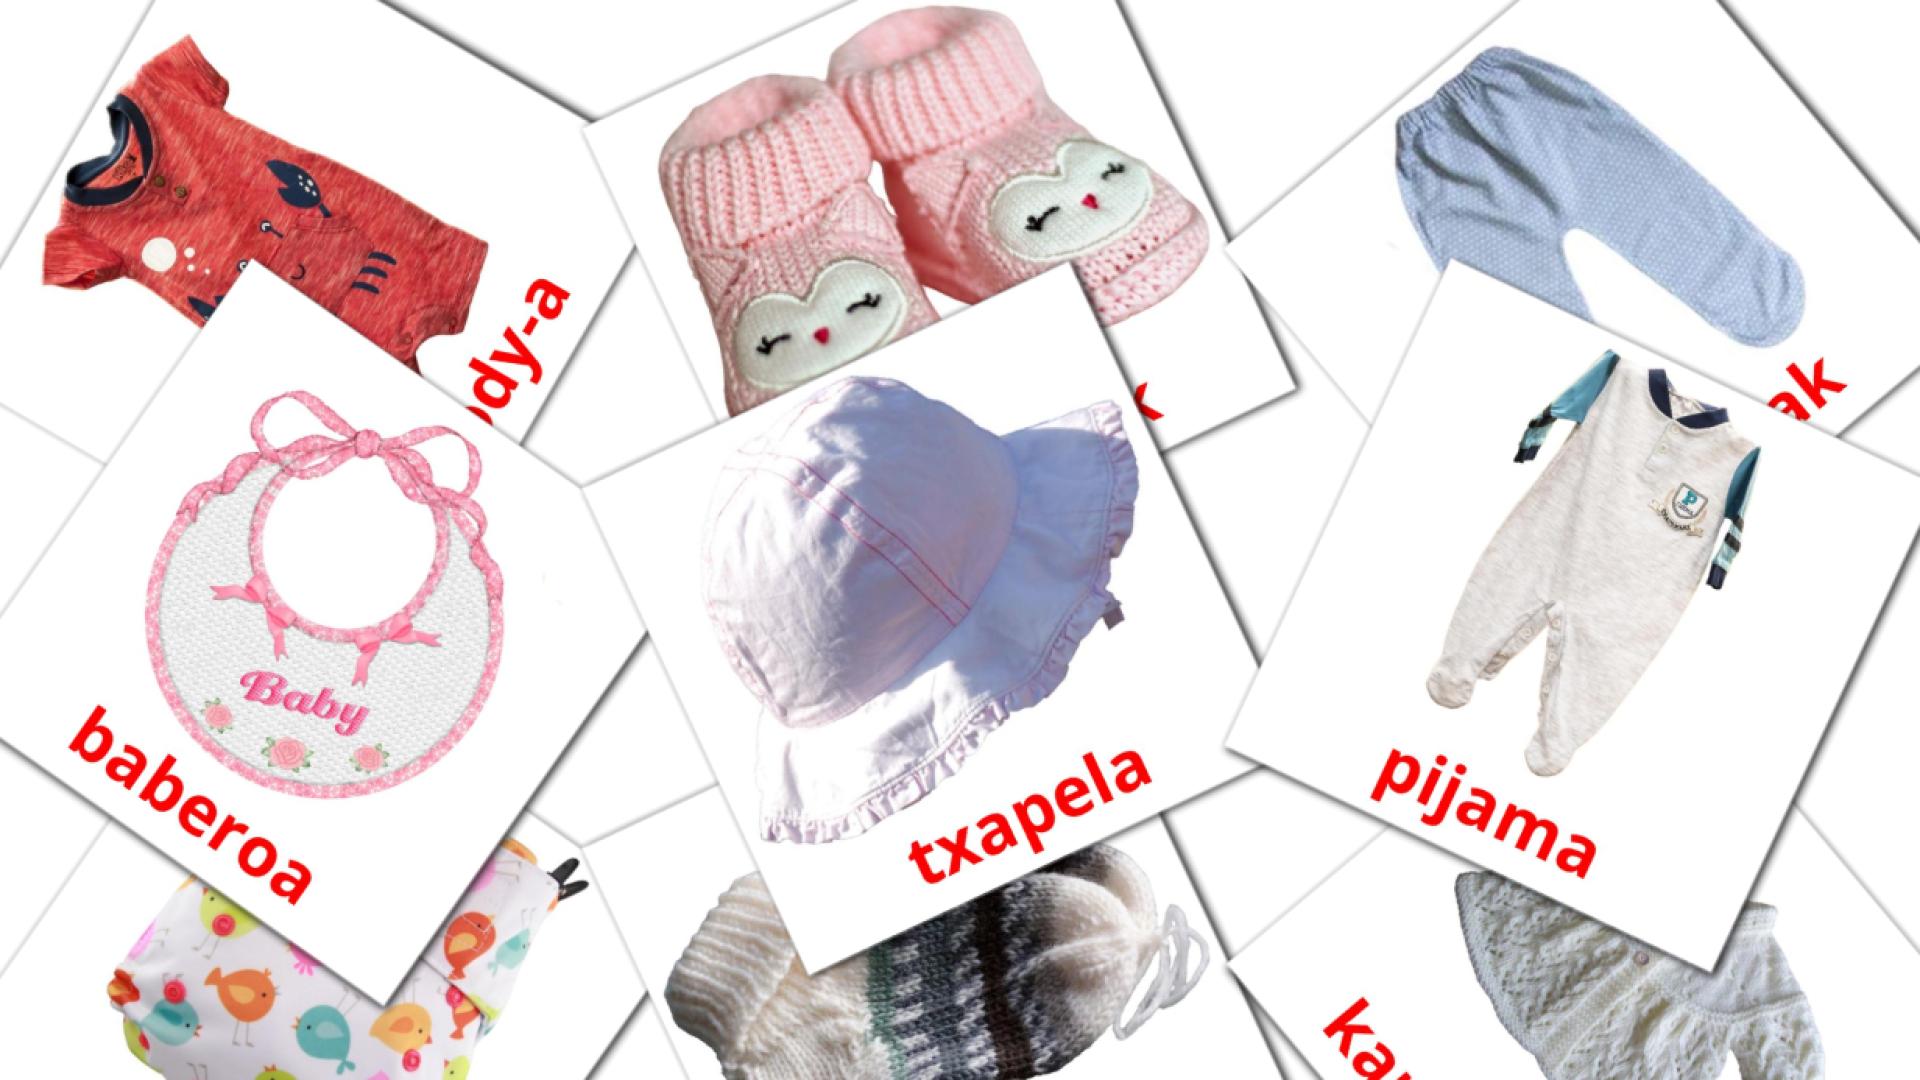 Baby clothes - basque vocabulary cards